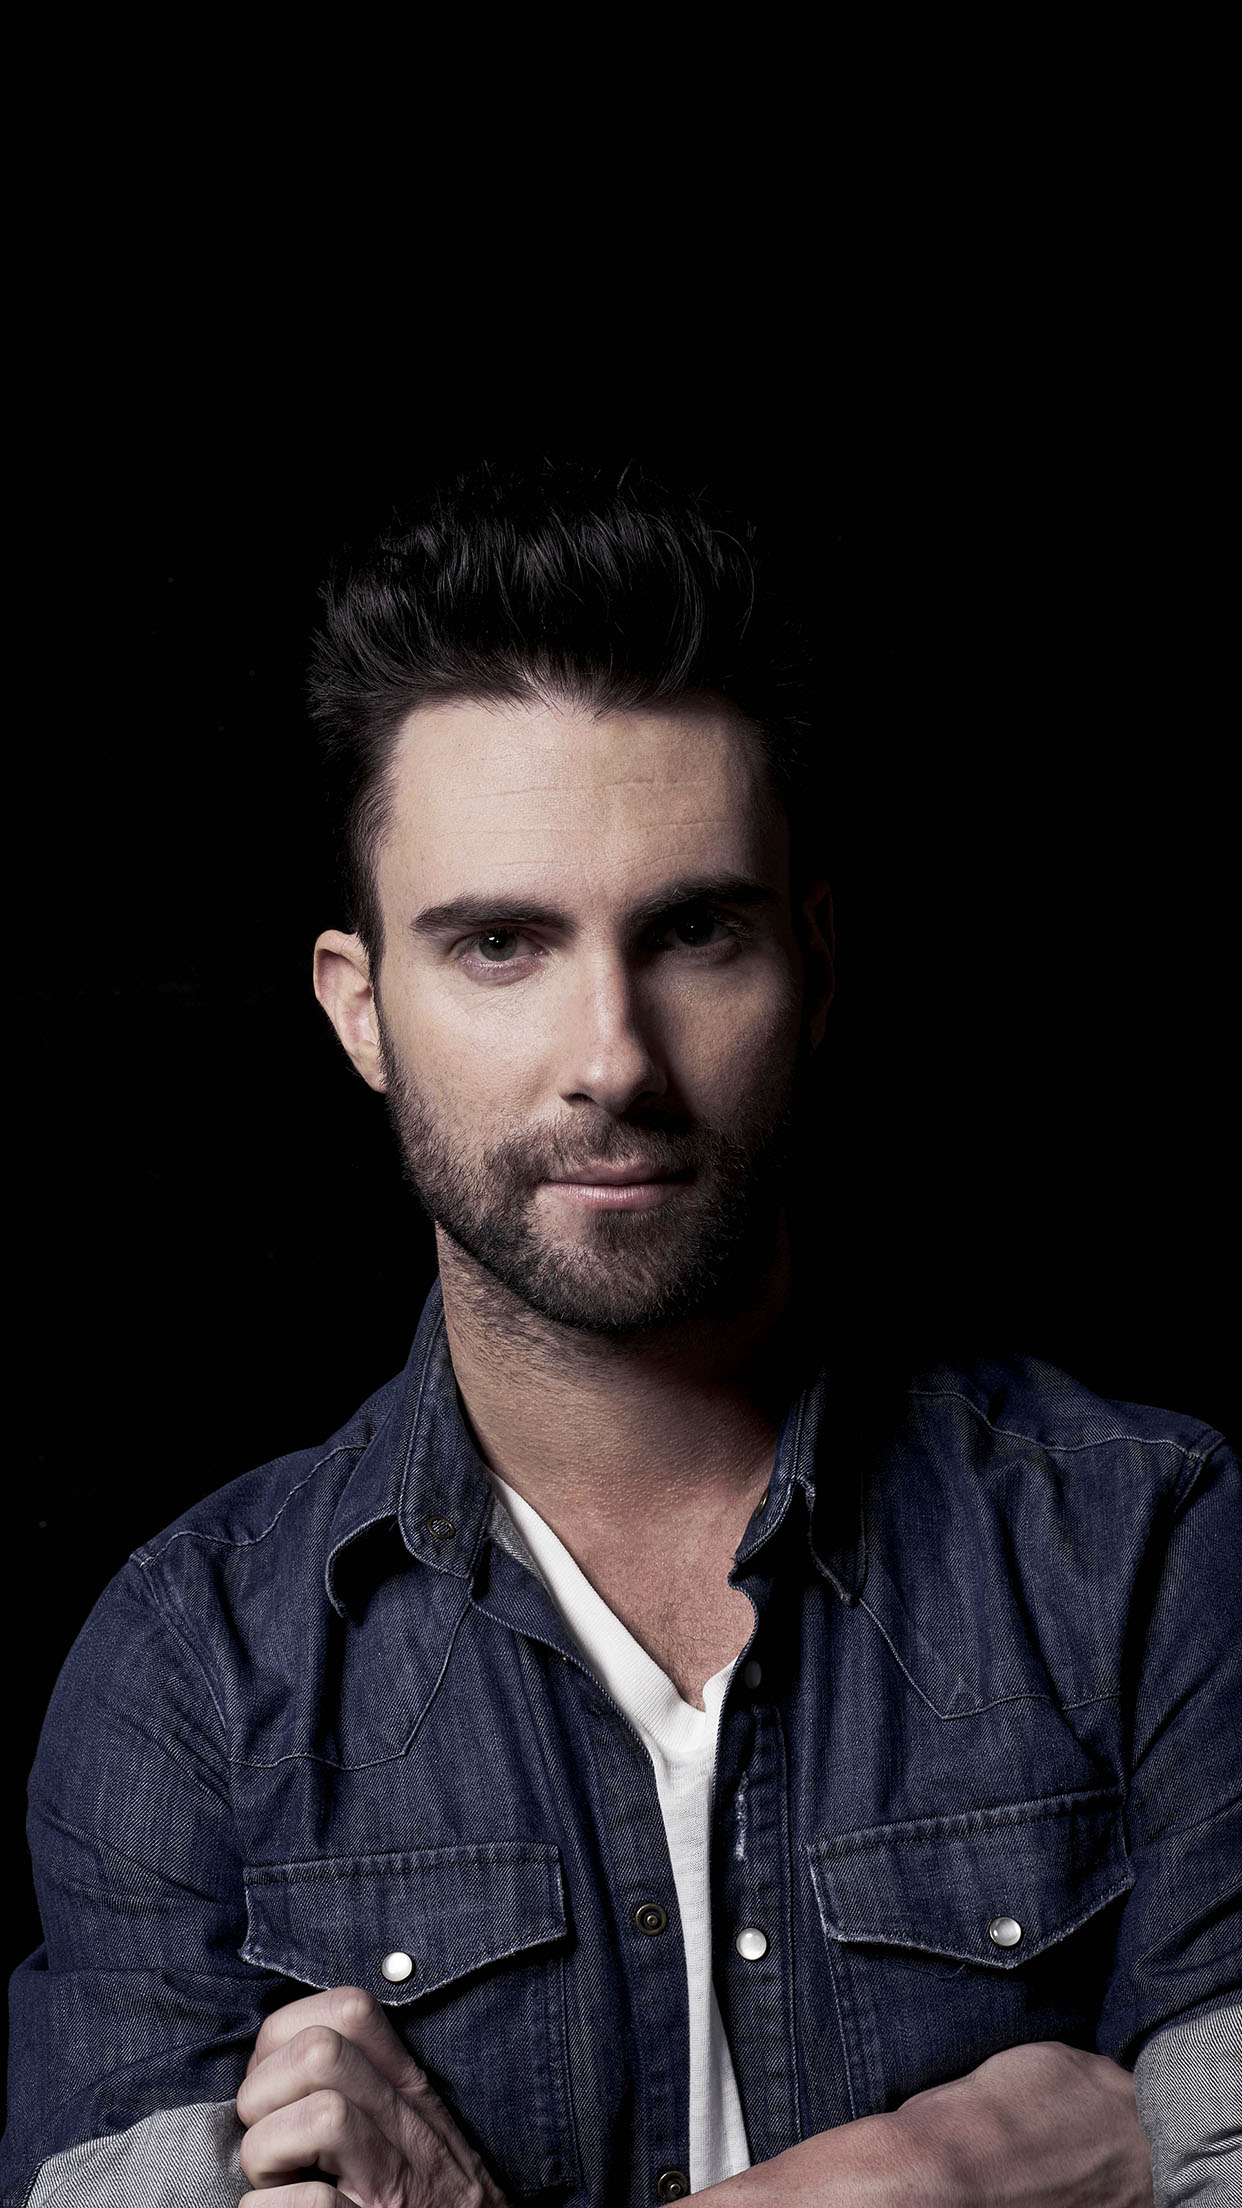 M Adam Levine Pop Rock Band Maroon 5 Music Celebrity Android wallpaper